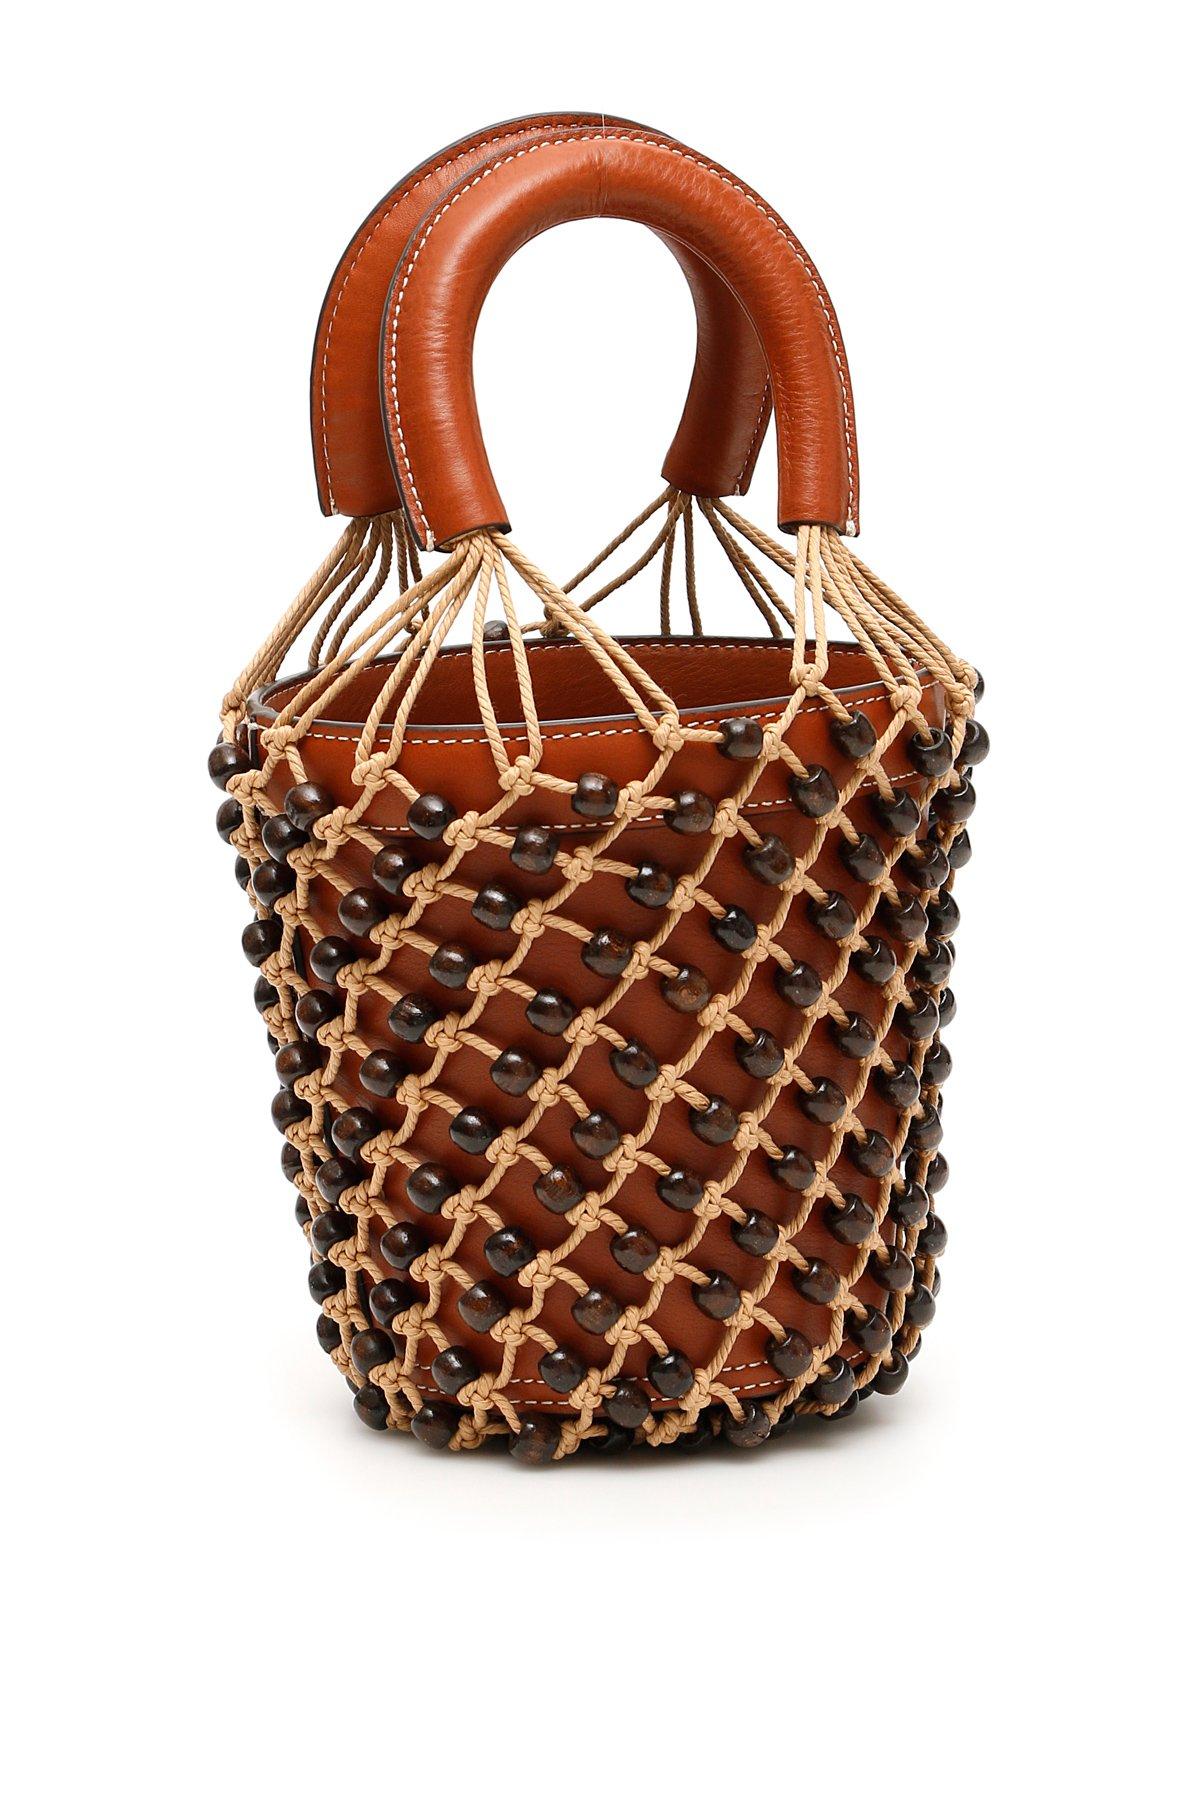 STAUD Moreau Mini Leather Bucket Bag in Tan (Brown) - Save 60% - Lyst